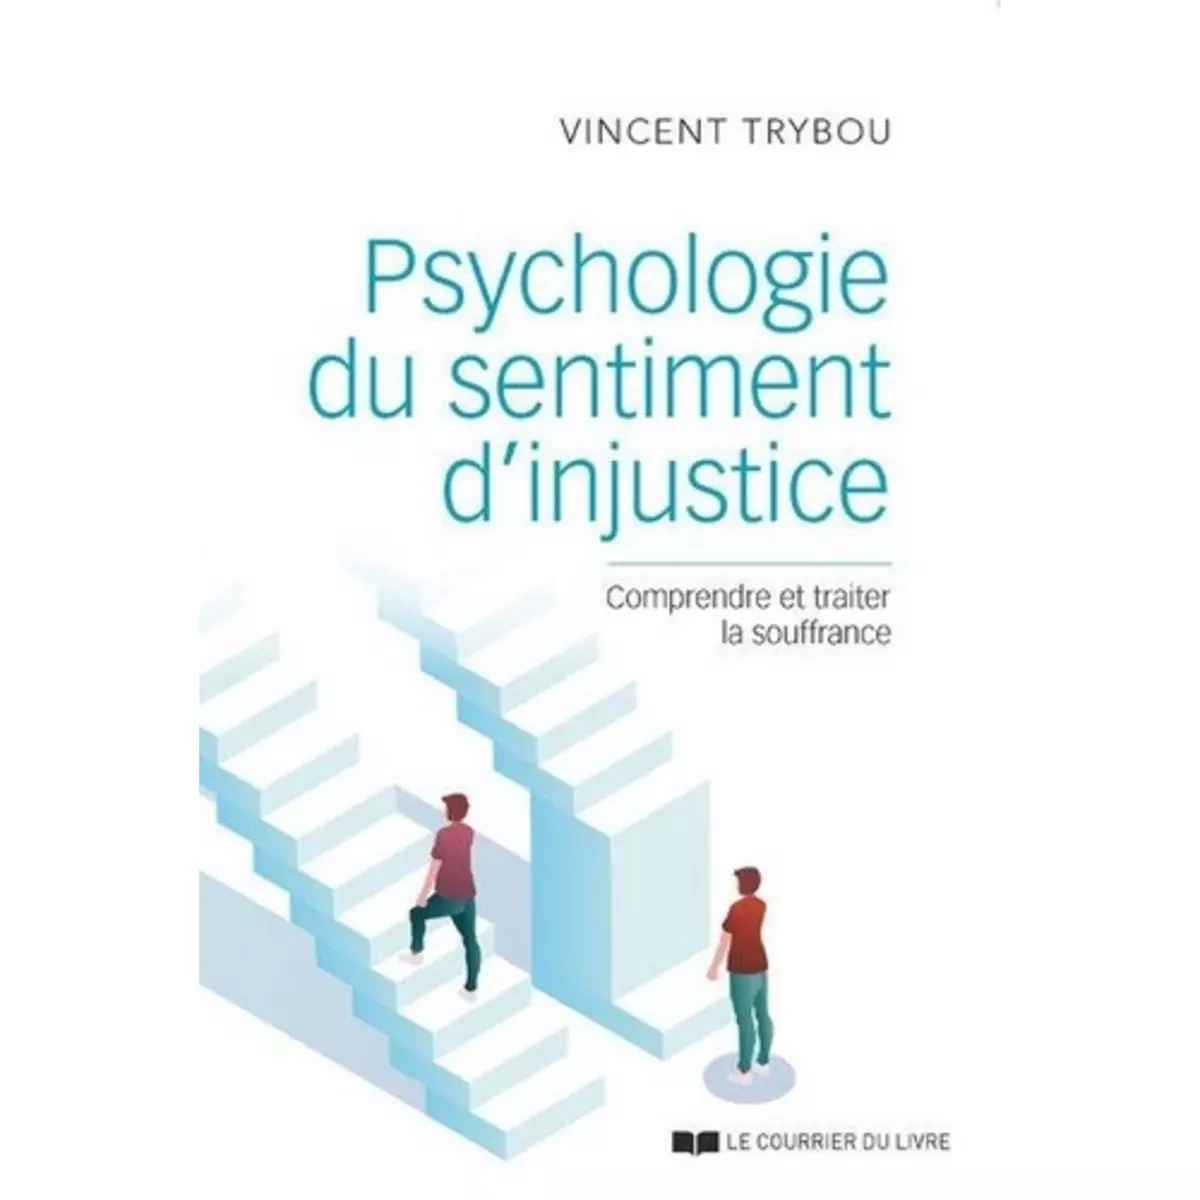  PSYCHOLOGIE DU SENTIMENT D'INJUSTICE. COMPRENDRE ET TRAITER LA SOUFFRANCE, Trybou Vincent